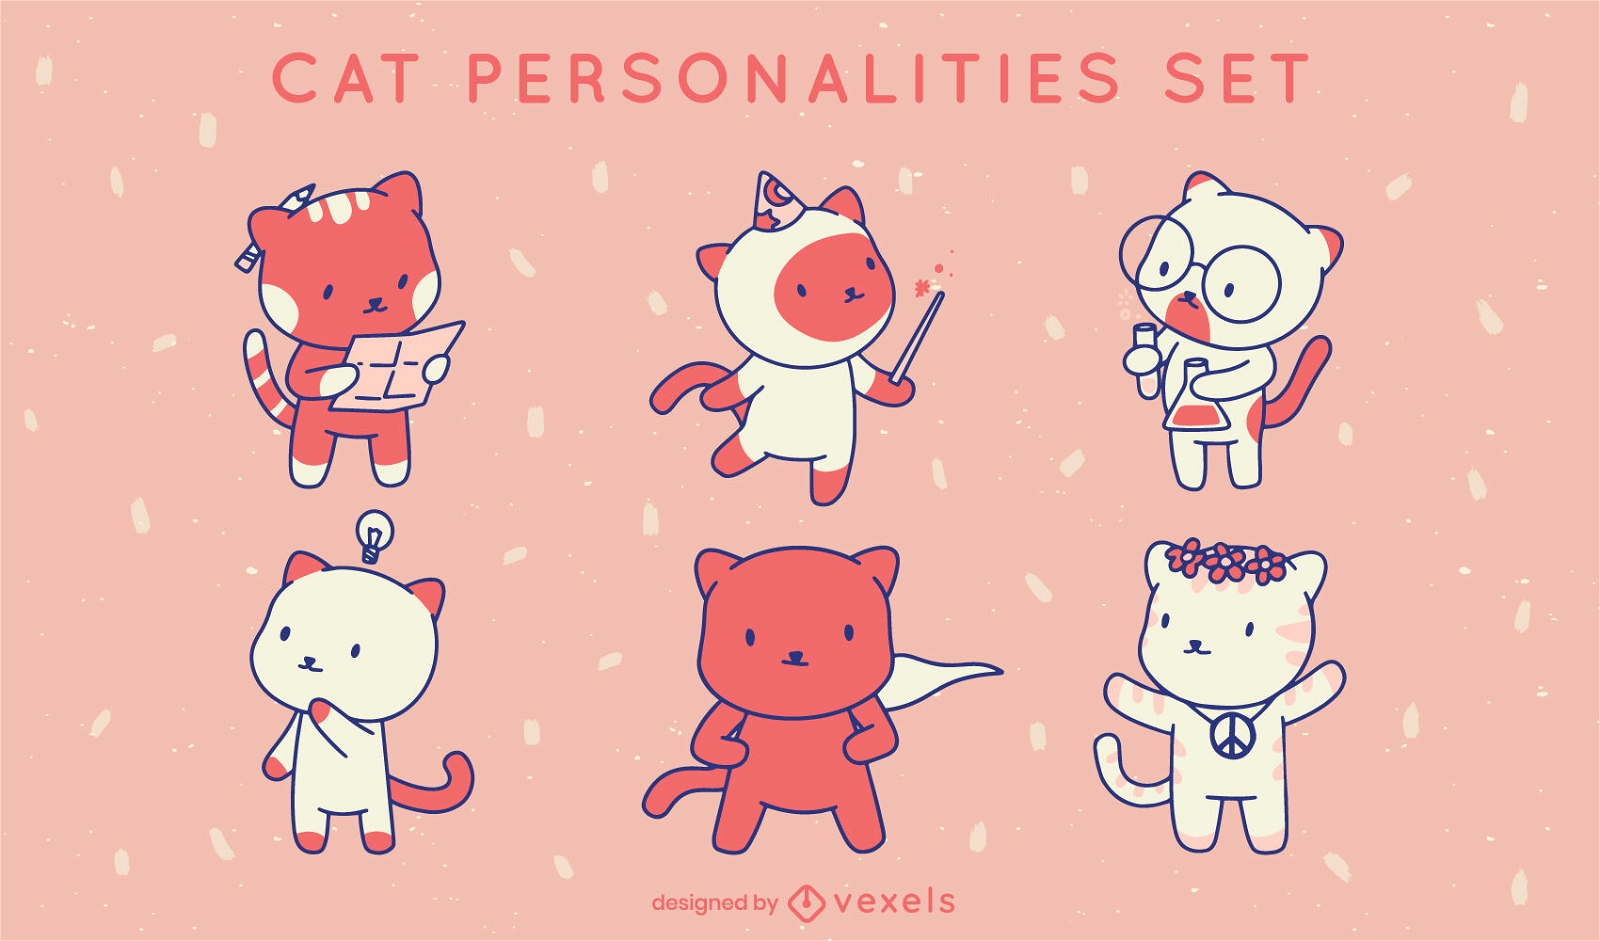 Cat personalities character set